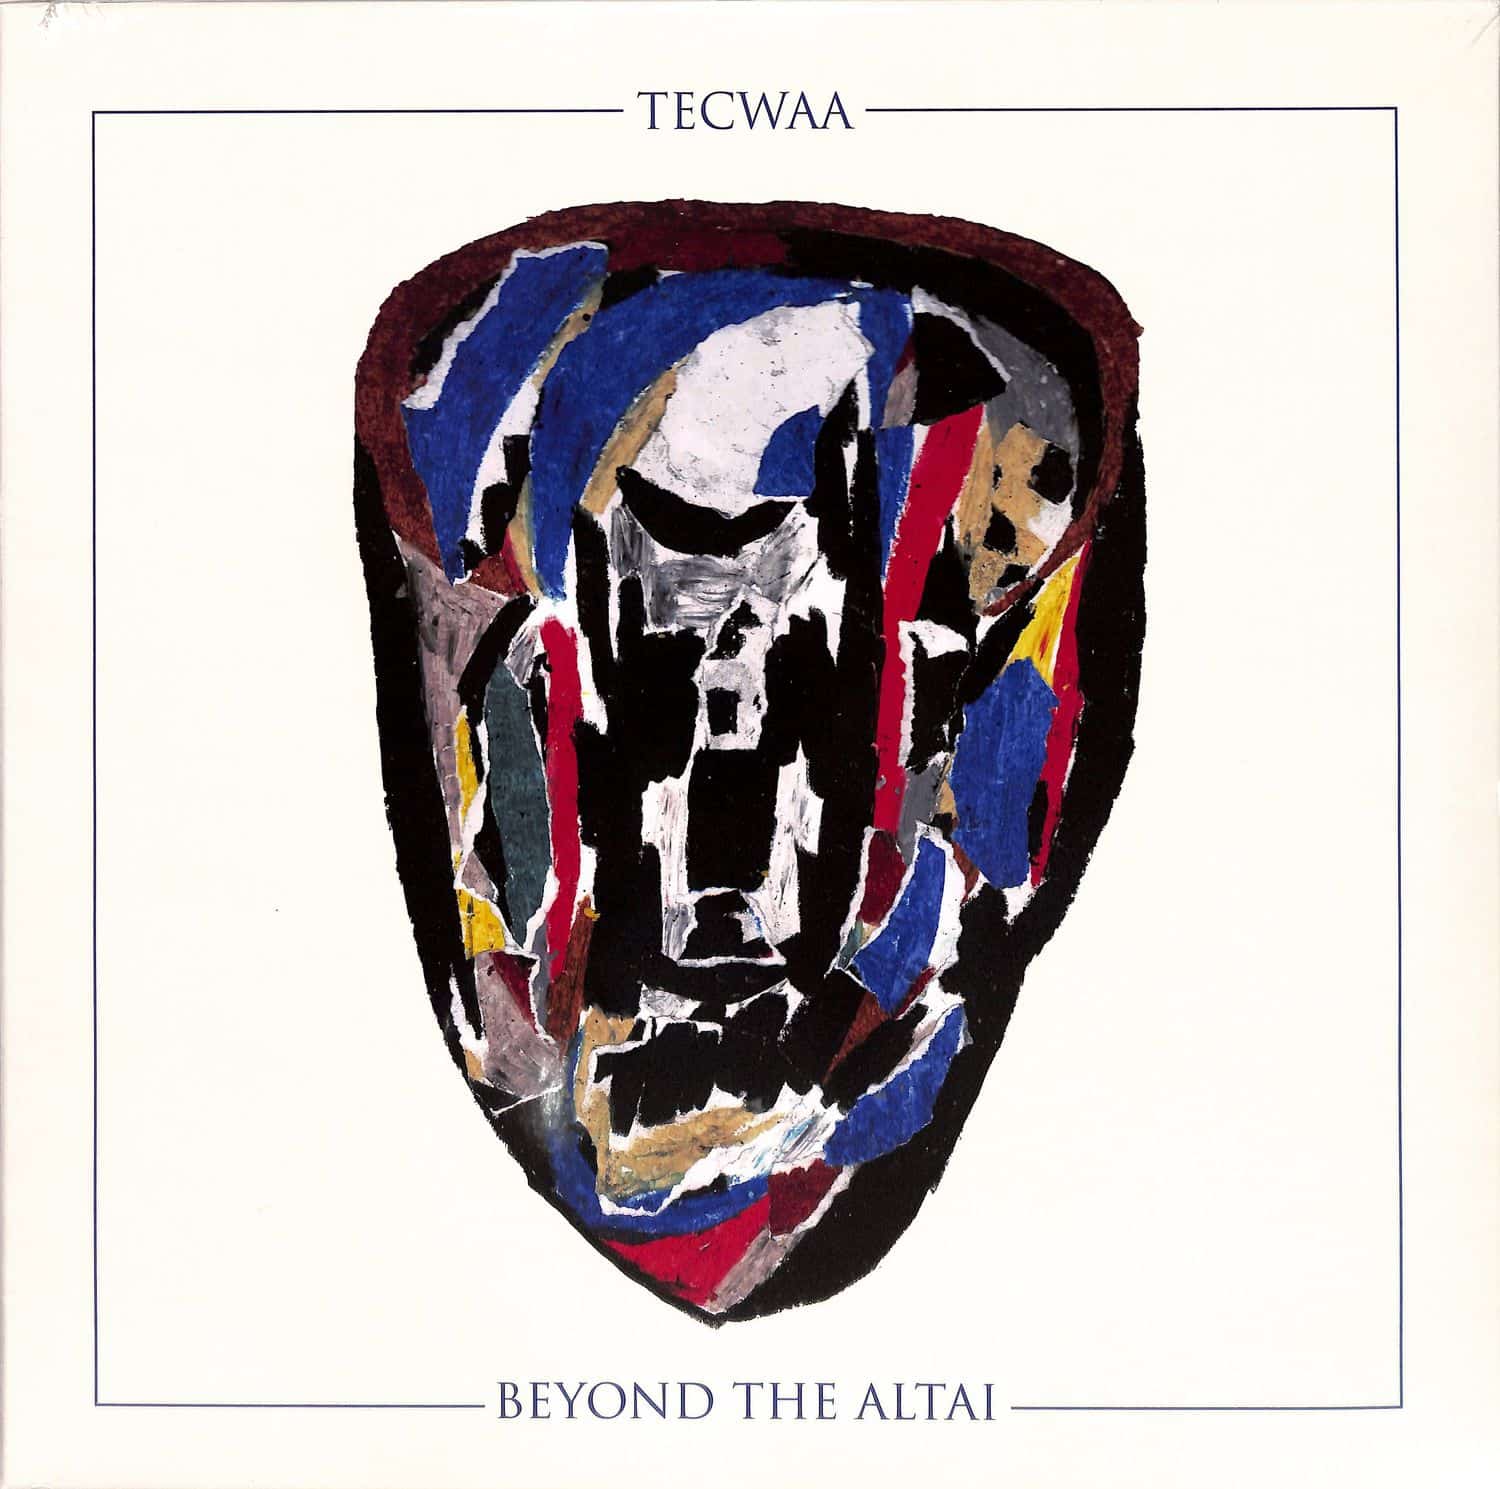 Tecwaa - BEYOND THE ALTAI 